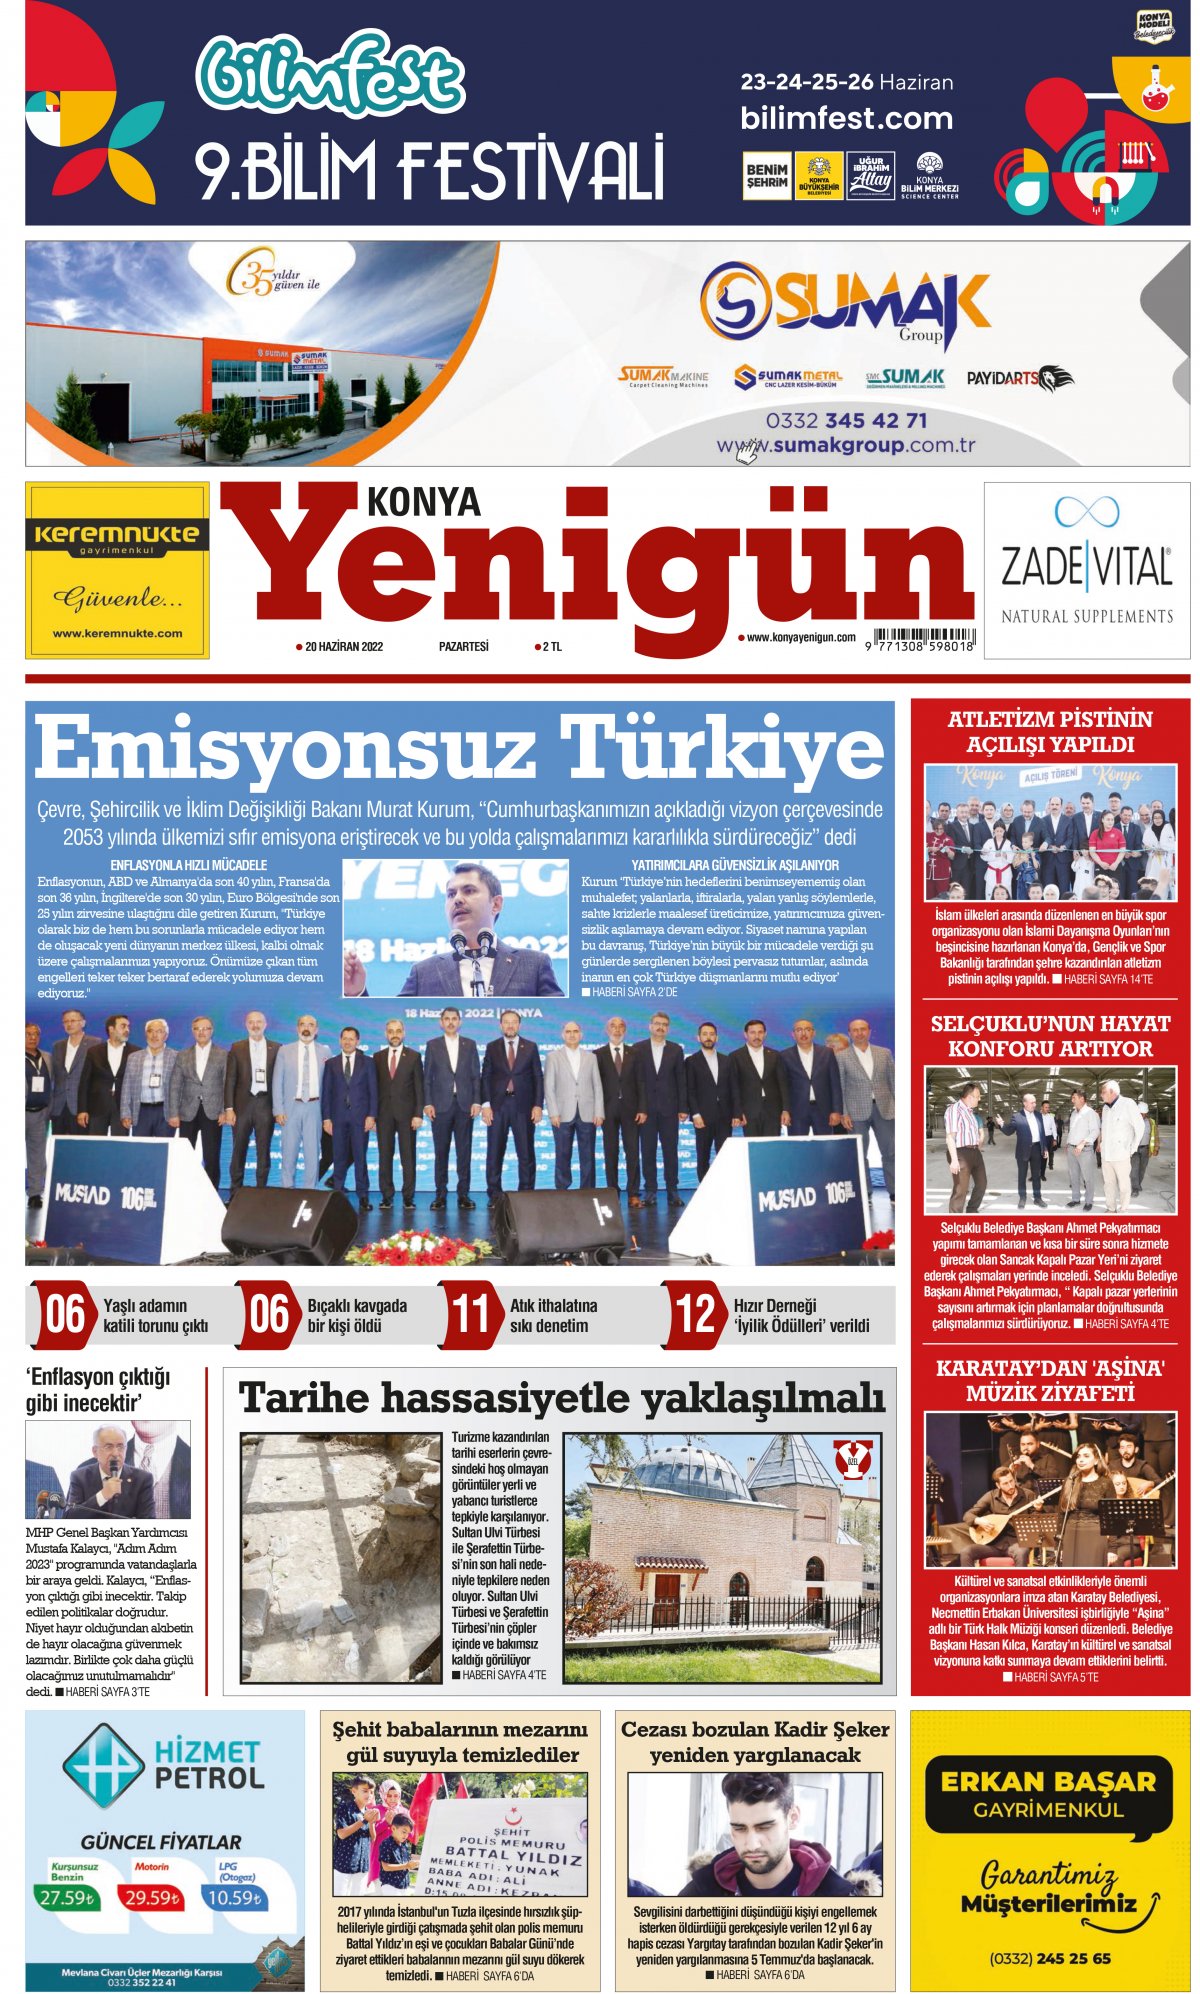 Konya Yenigün Gazetesi - 20.06.2022 Manşeti